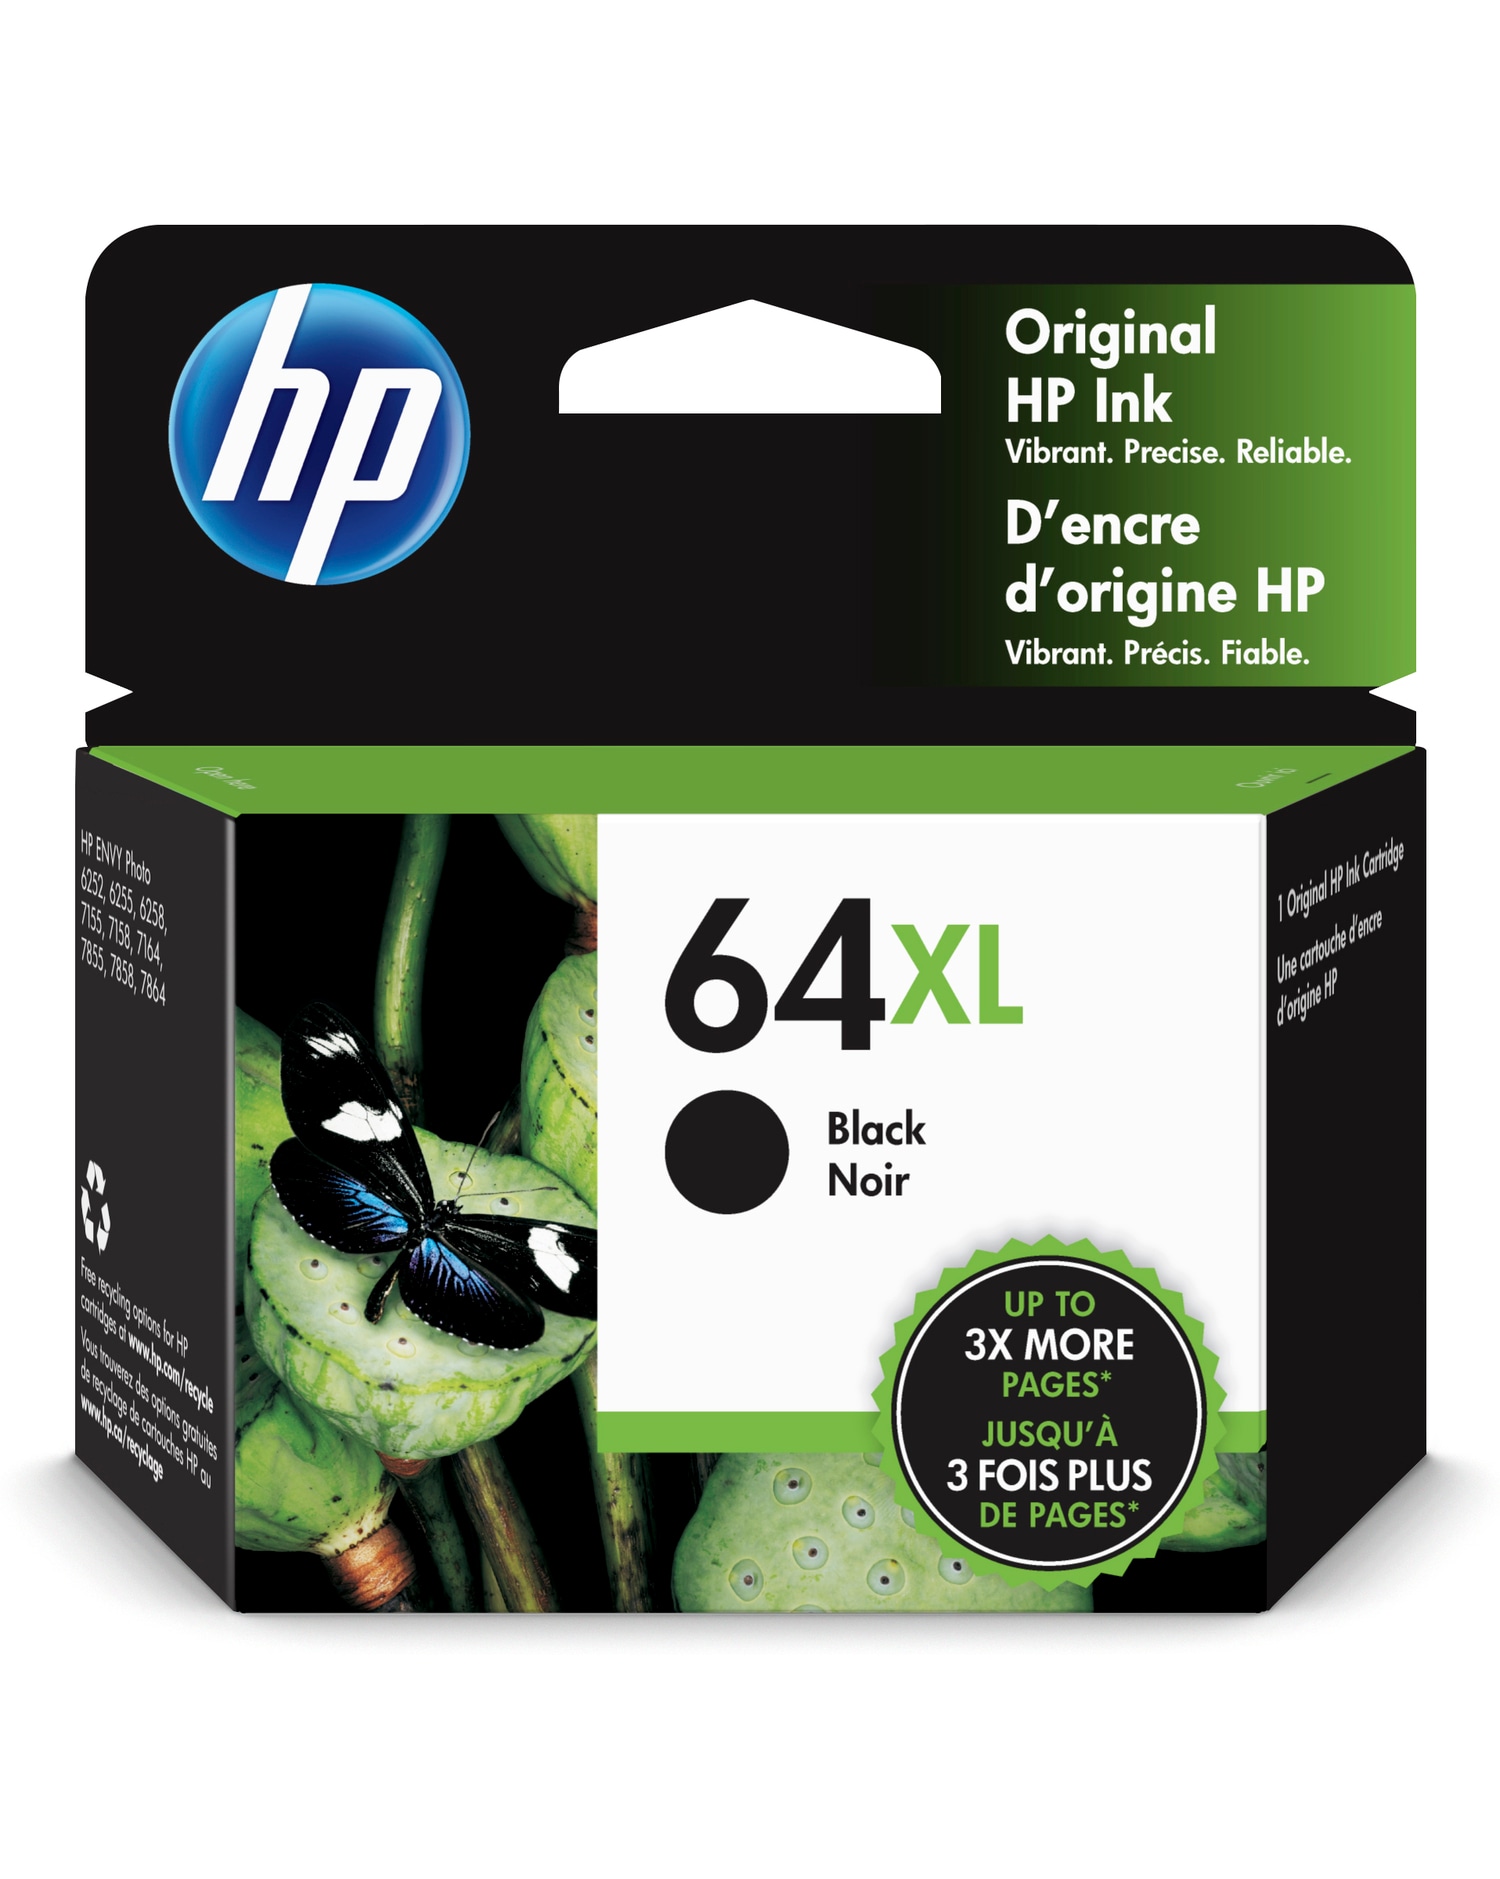 HP 64XL High Yield Black Original Ink Cartridge, ~600 pages, N9J92AN#140 - image 1 of 8